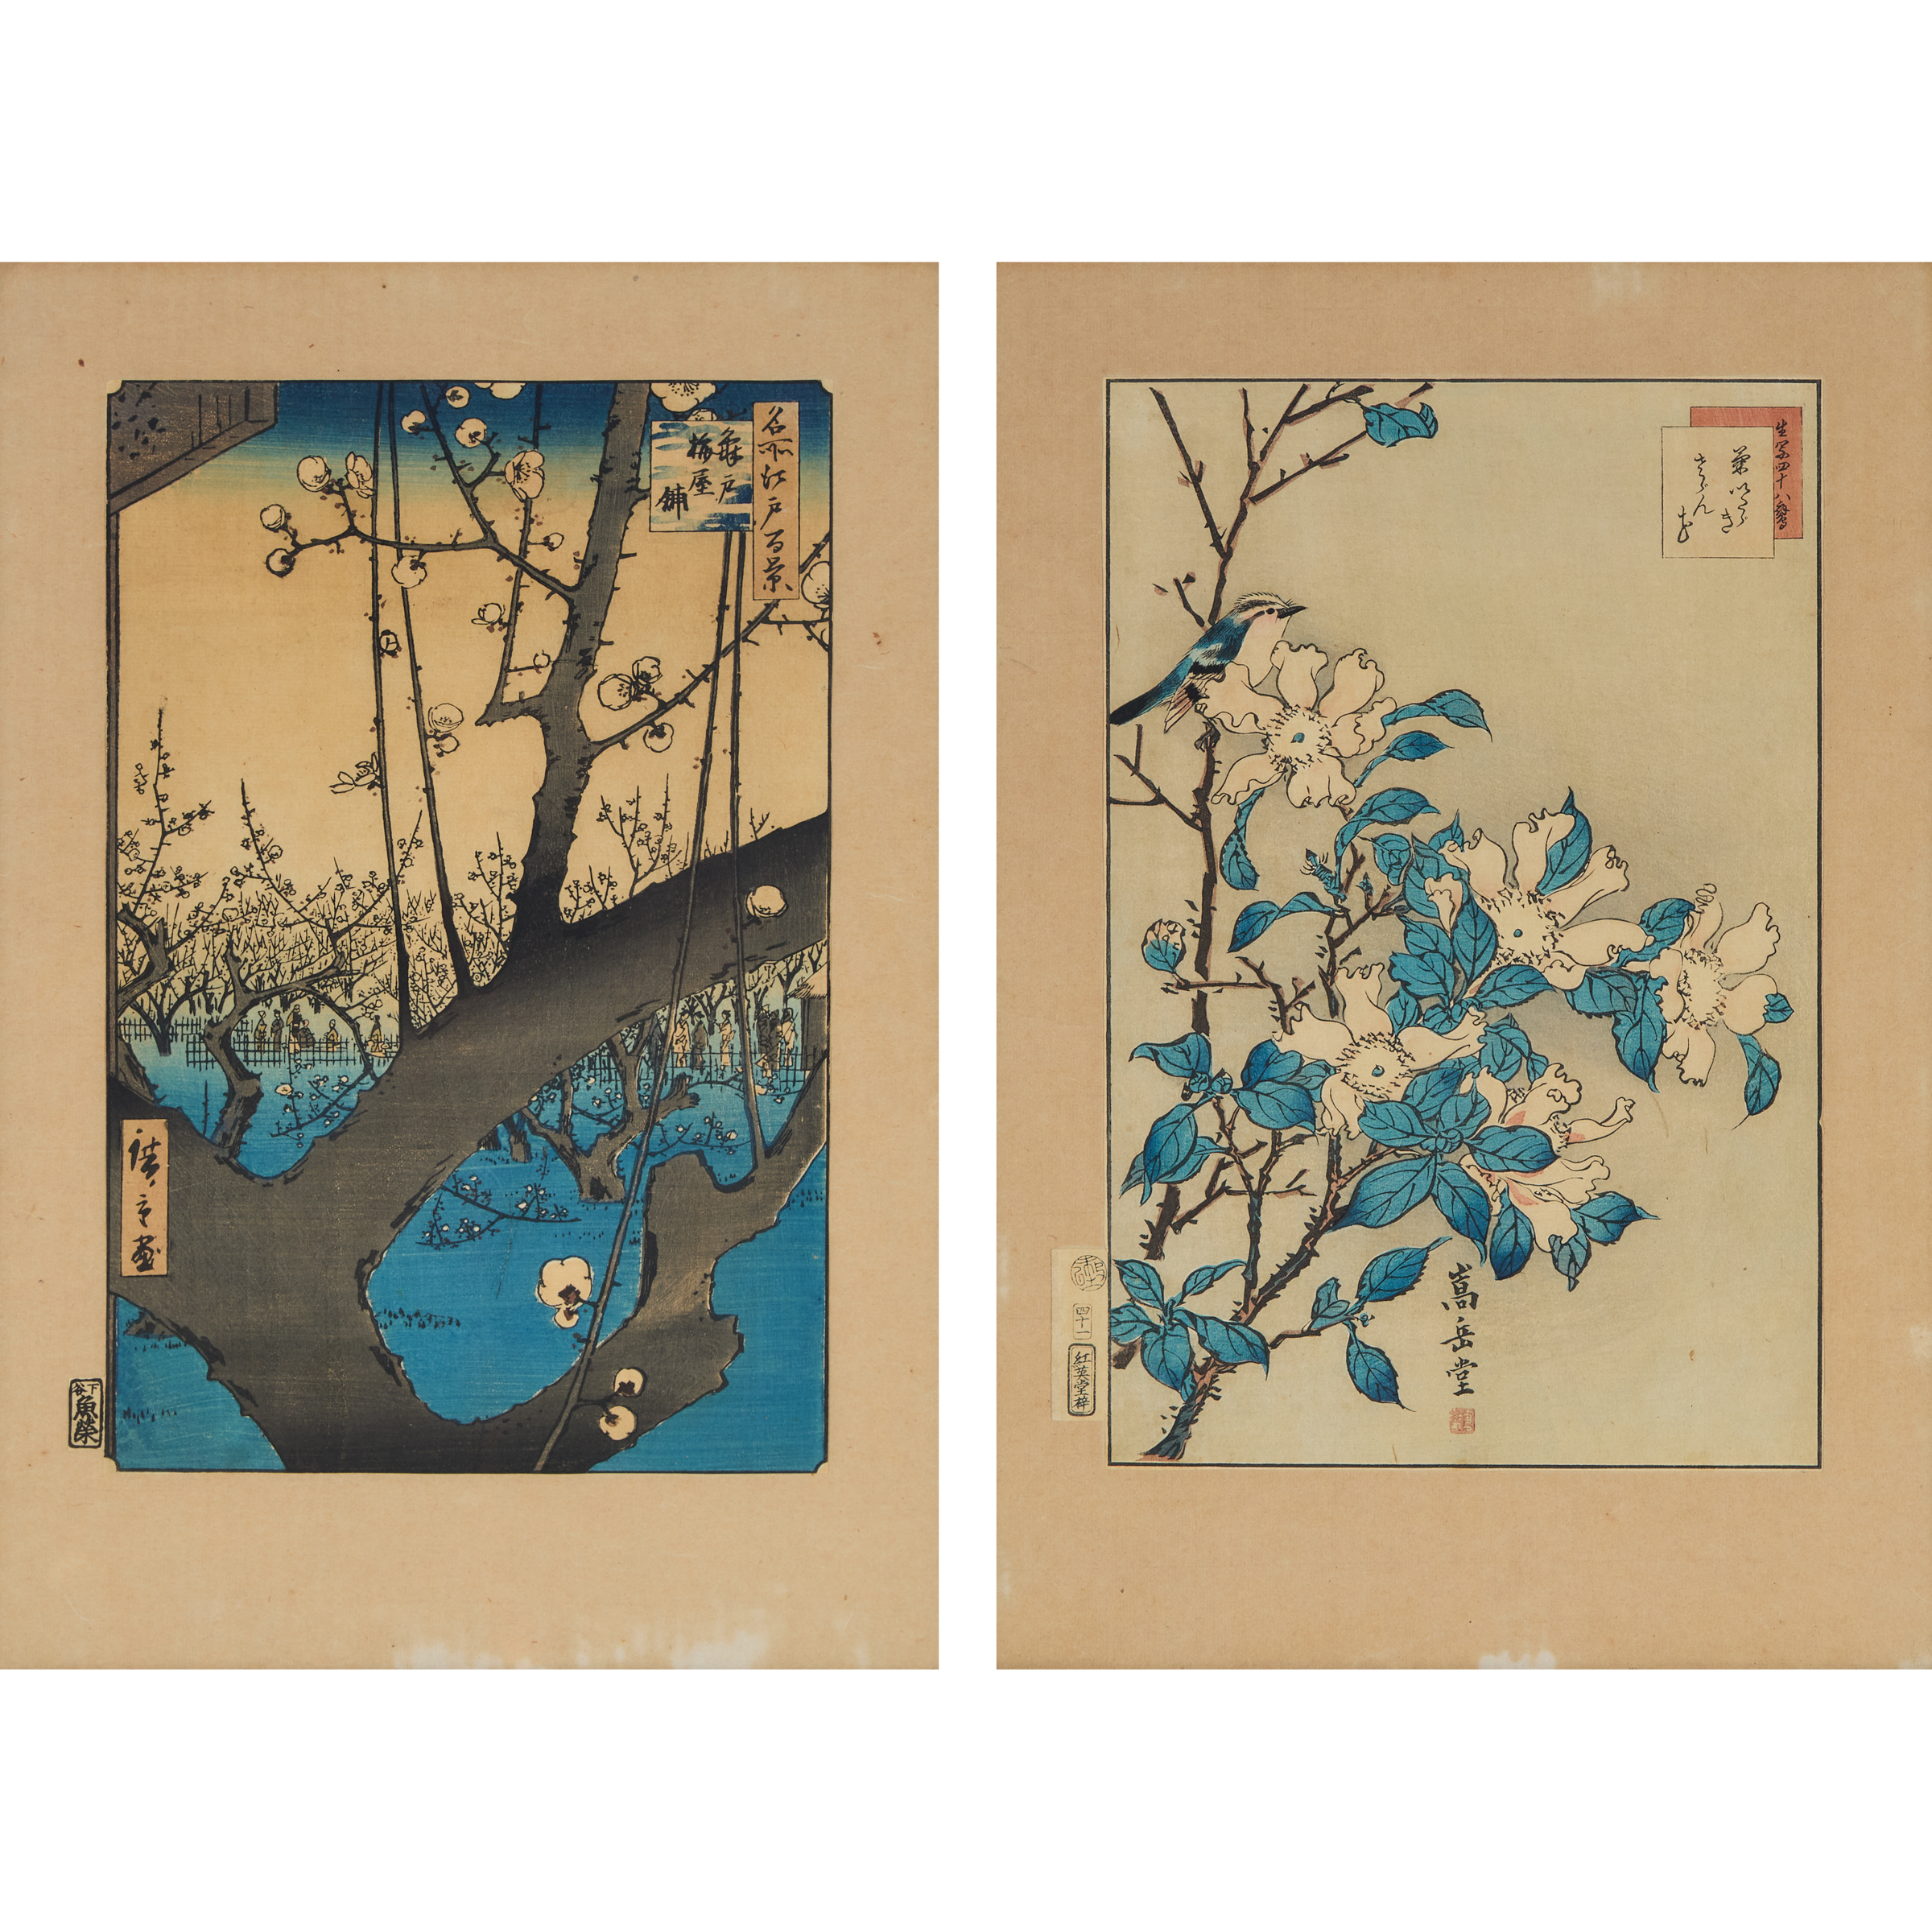 Utagawa Hiroshige 1797 1858 and 2fb05f4